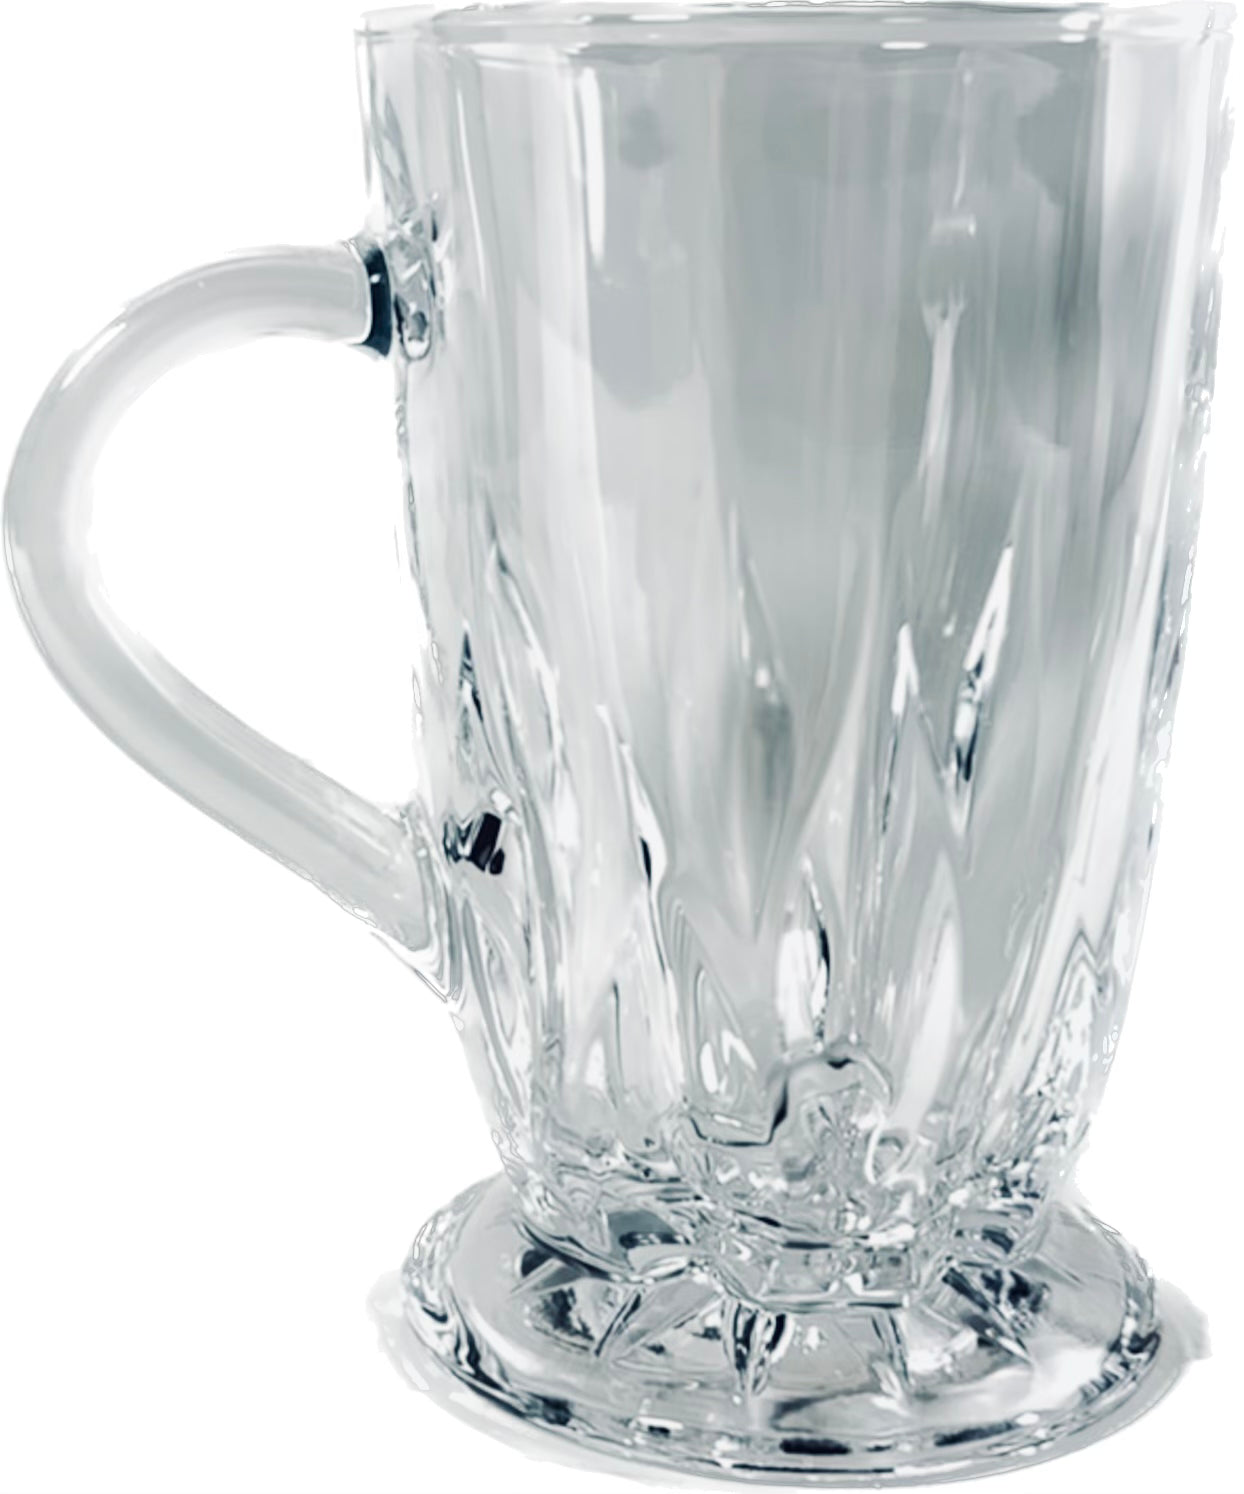 9.6 oz (285 ml) Tea Glass - KTZB83